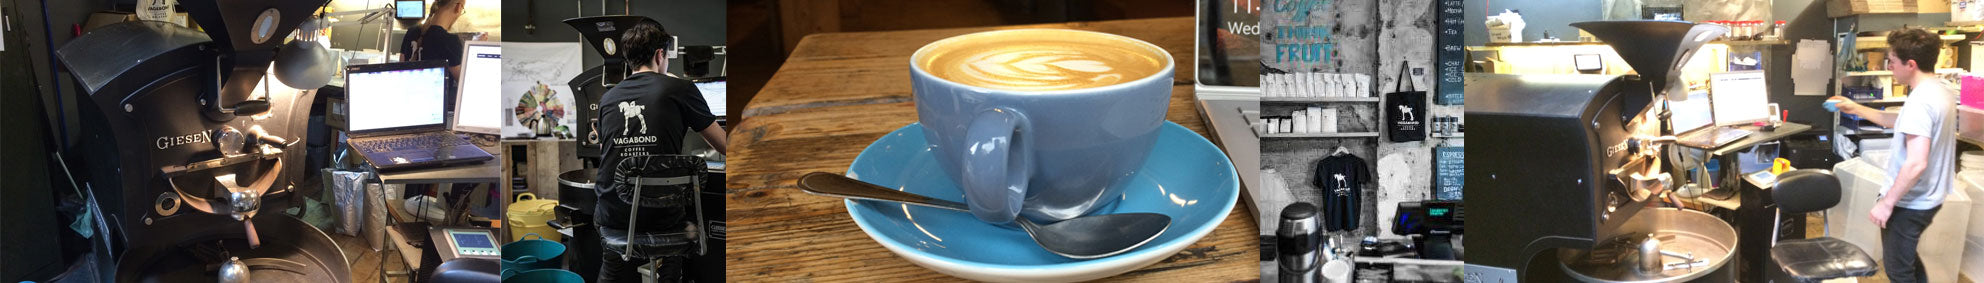 Visit to Vagabond Coffee Roasters - London